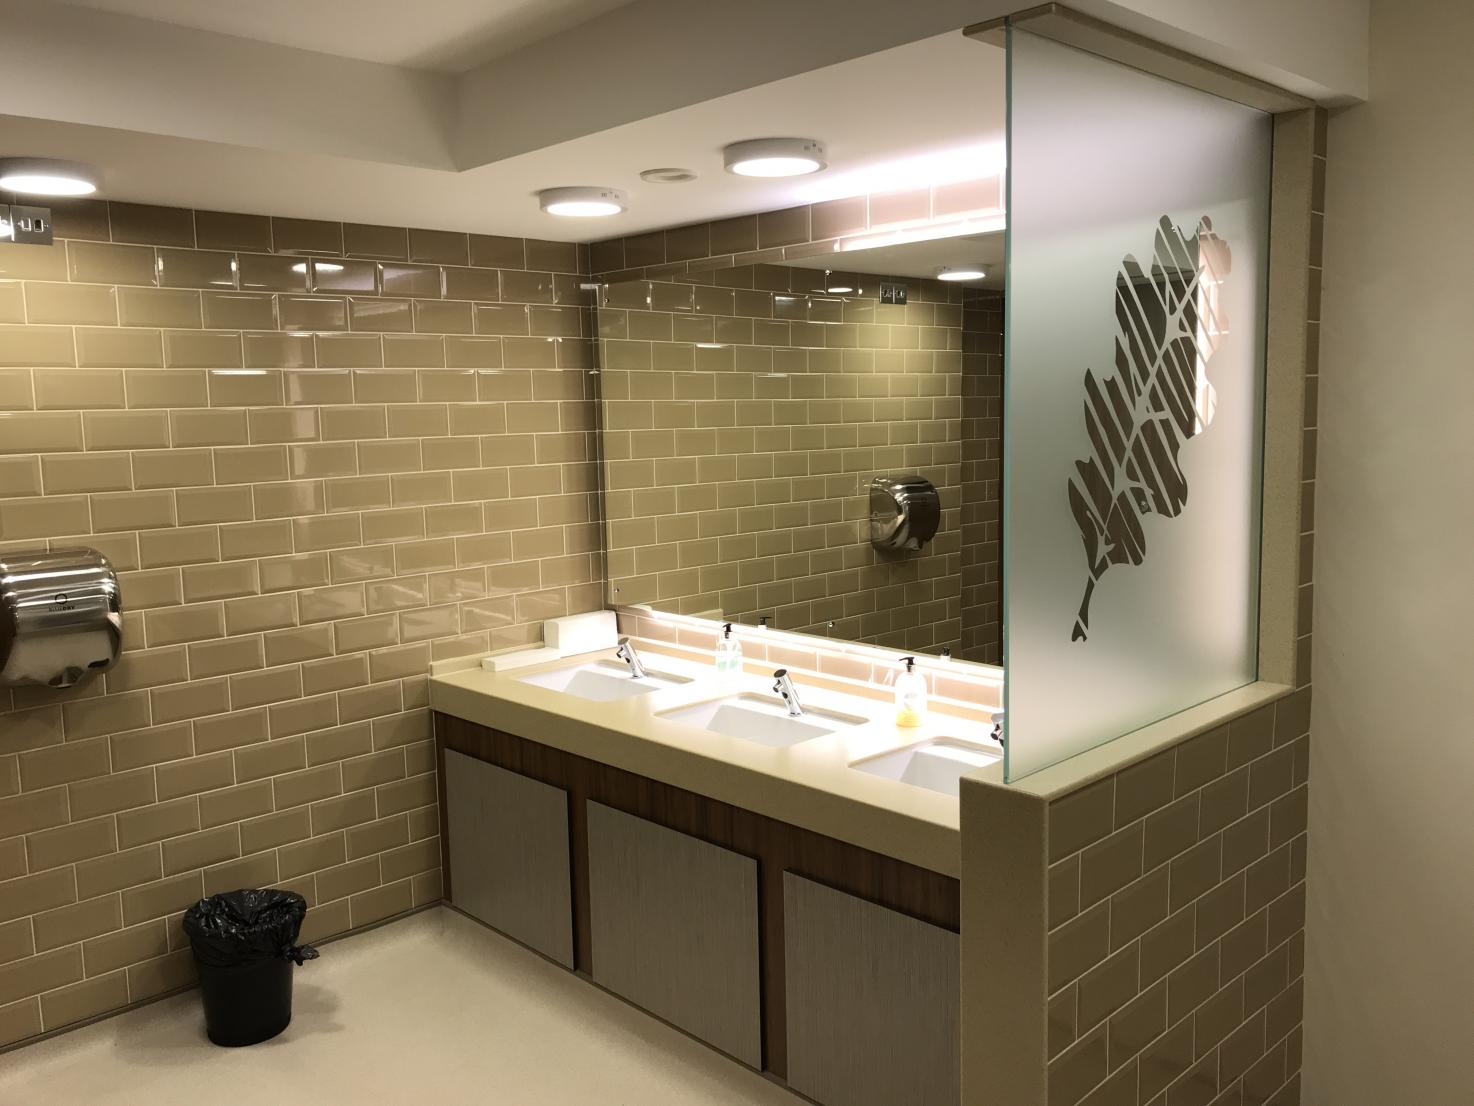 HI-MACS Almond Pearl bathroom vanity run